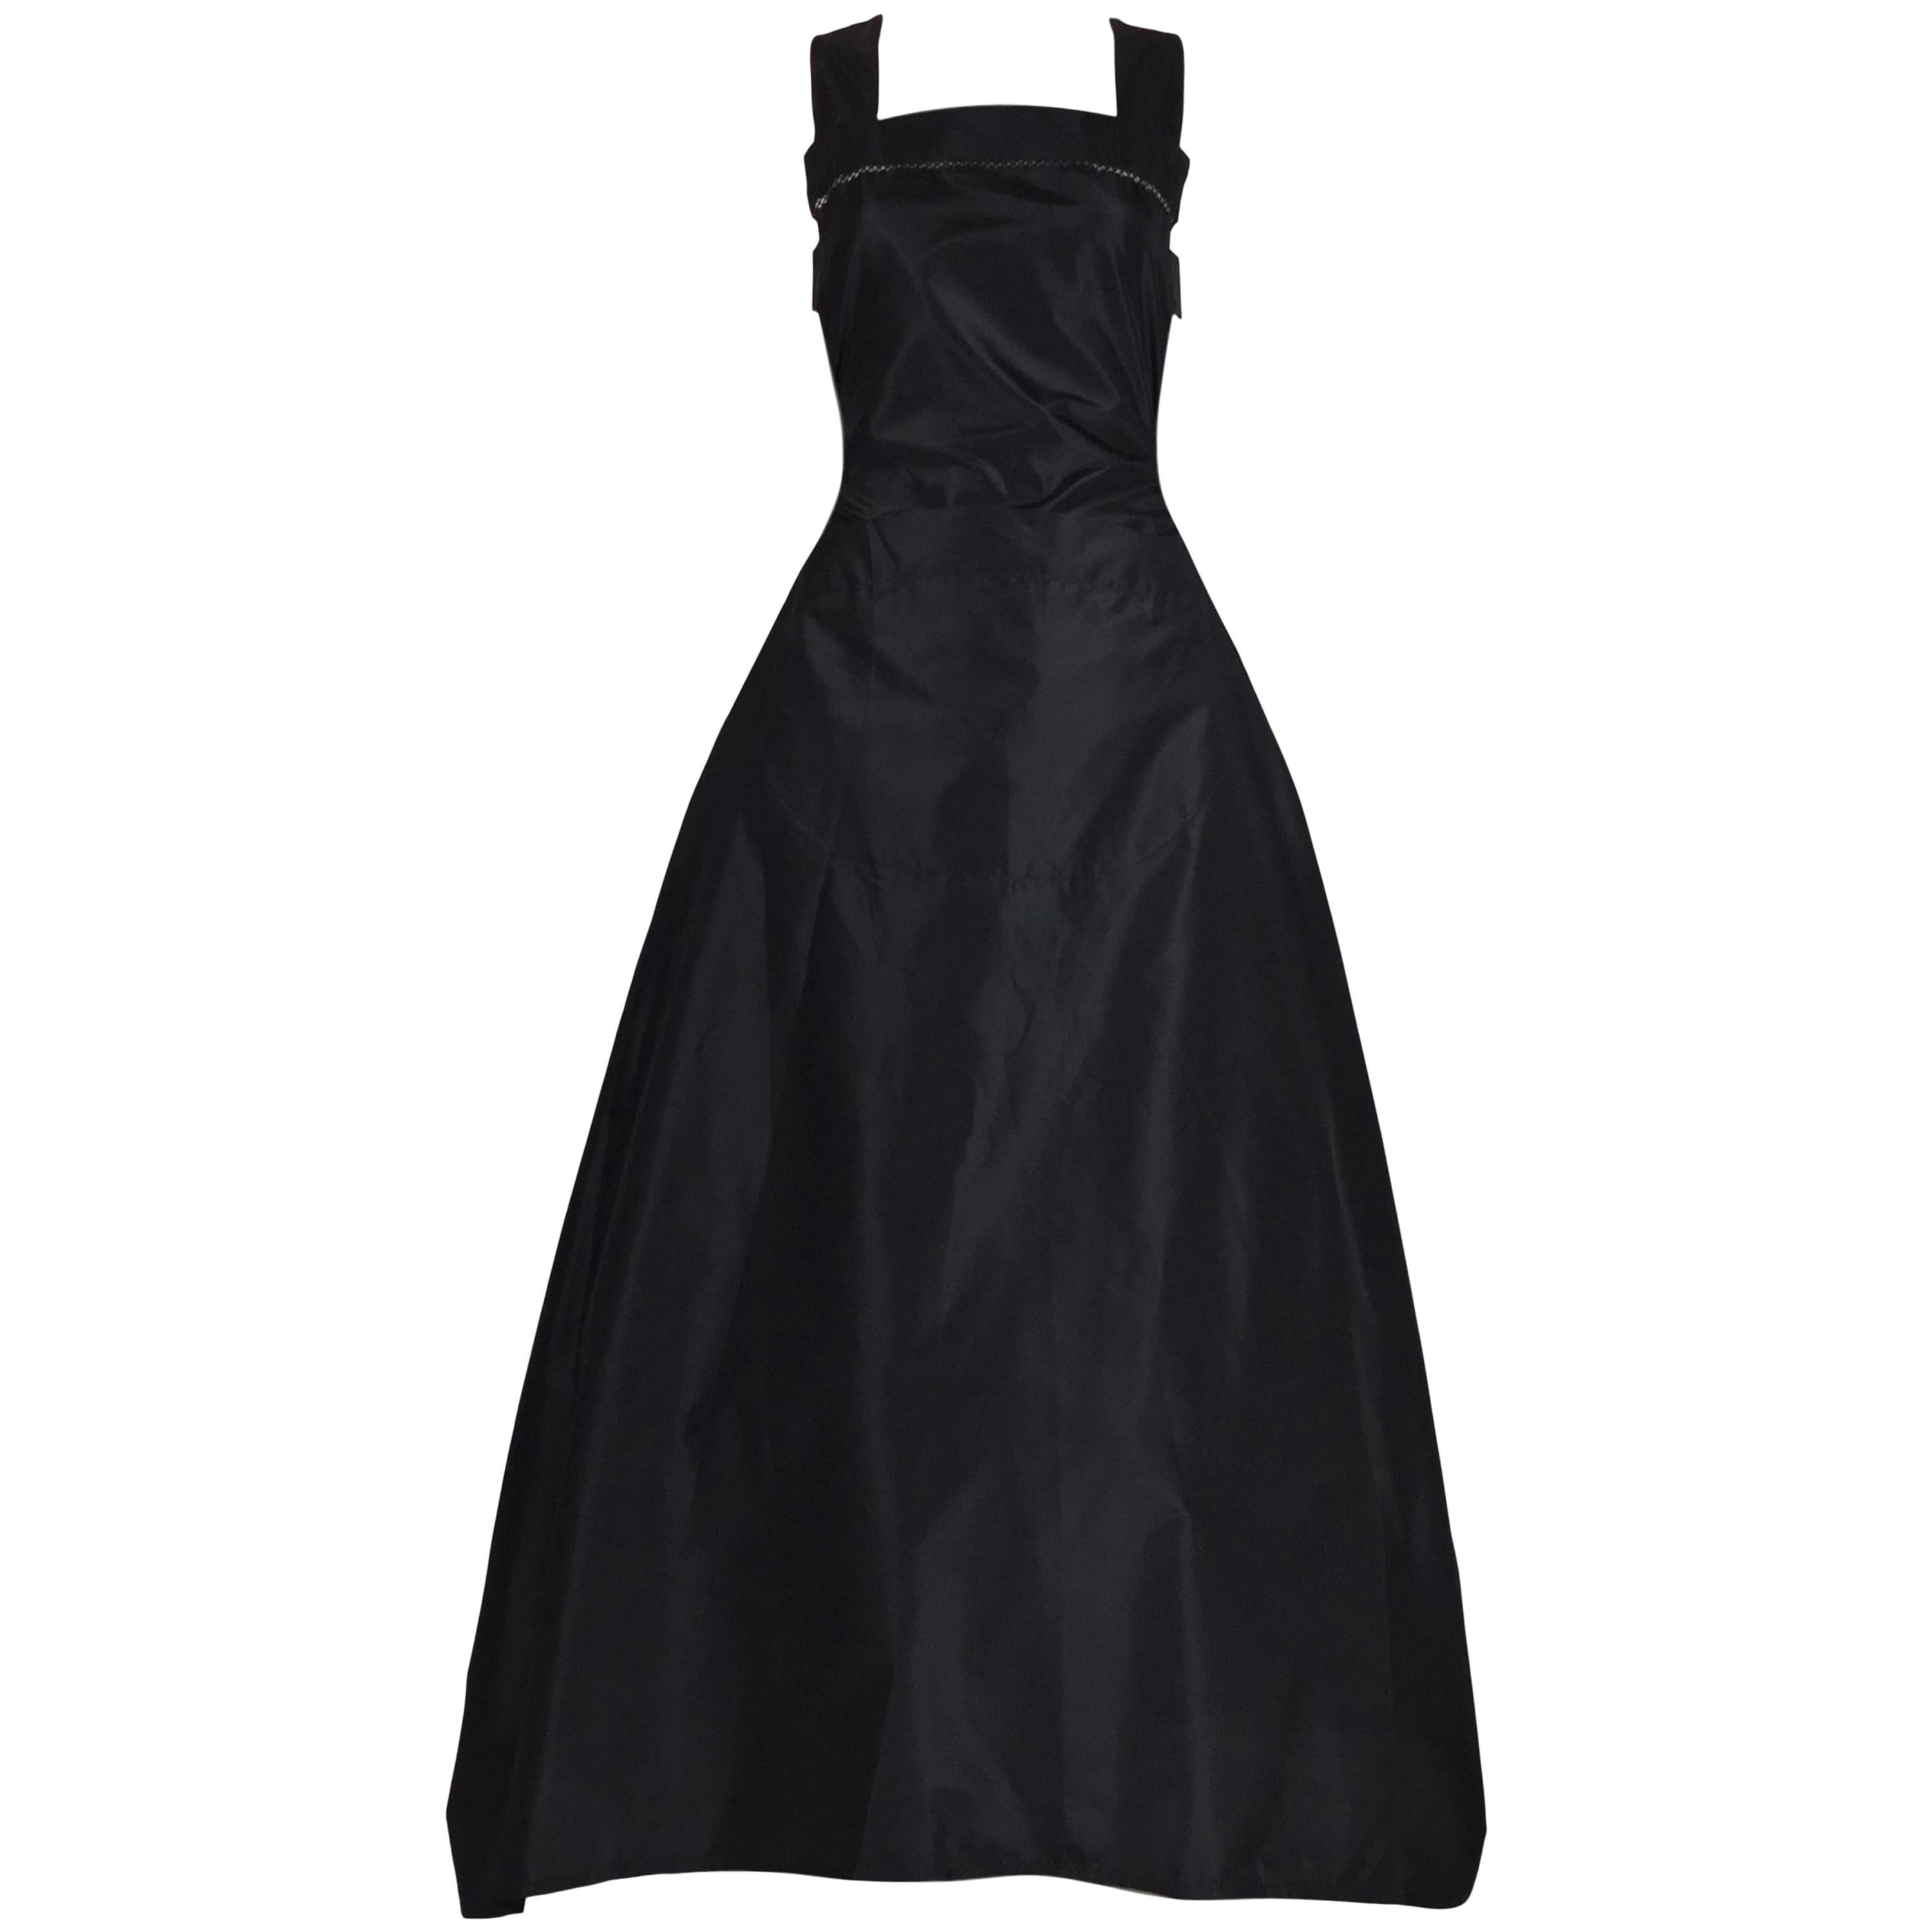 S/S 1998 Jean Paul Gaultier Runway Black Suspender Pinafore Steampunk Gown Dress